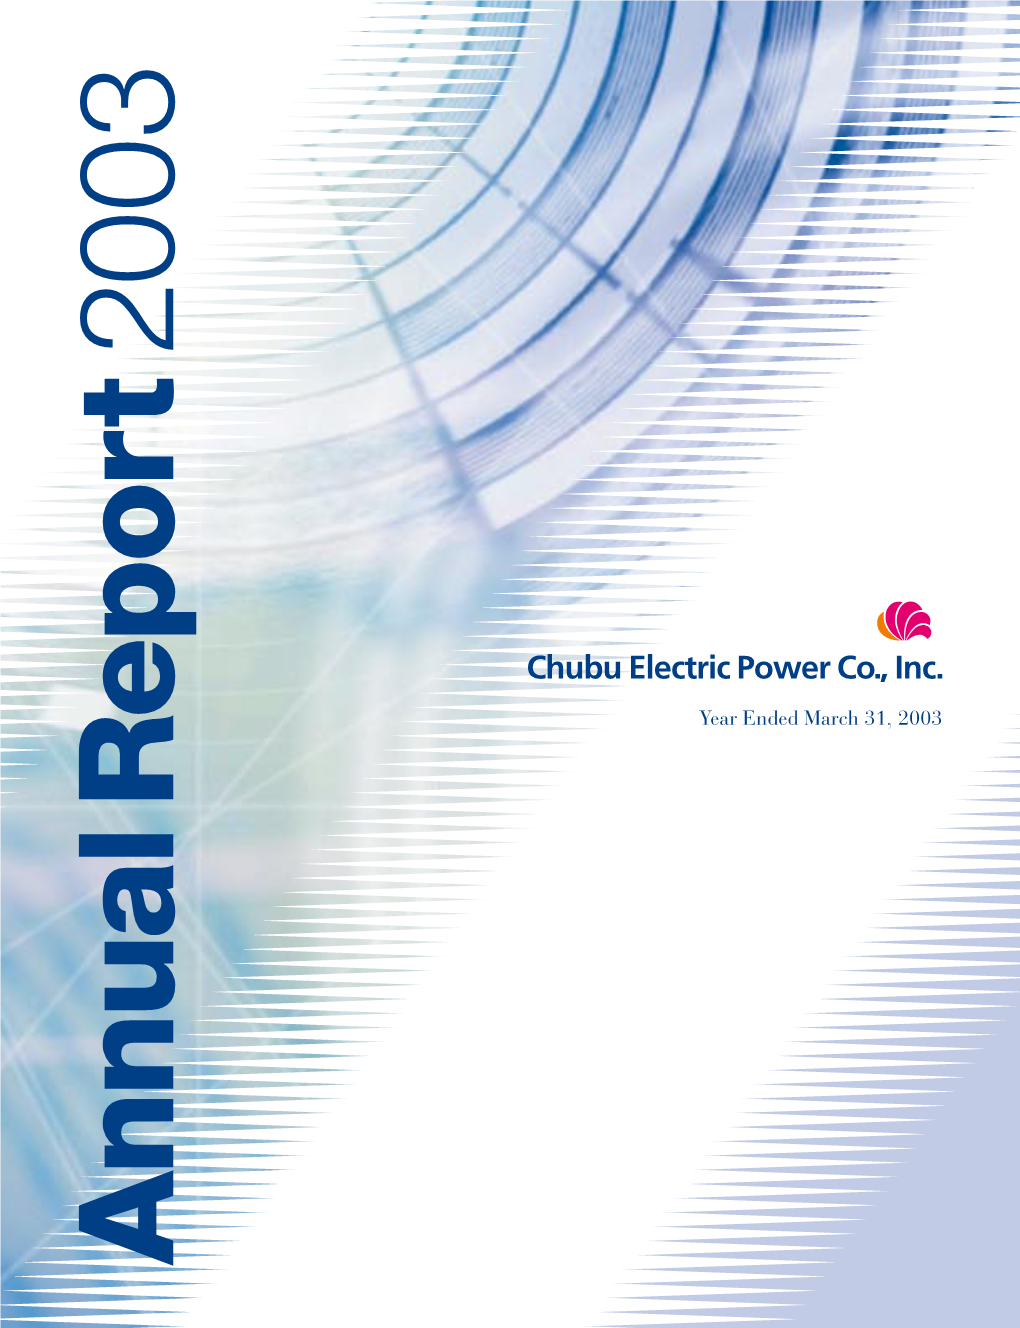 Chubu Electric Power Co., Inc